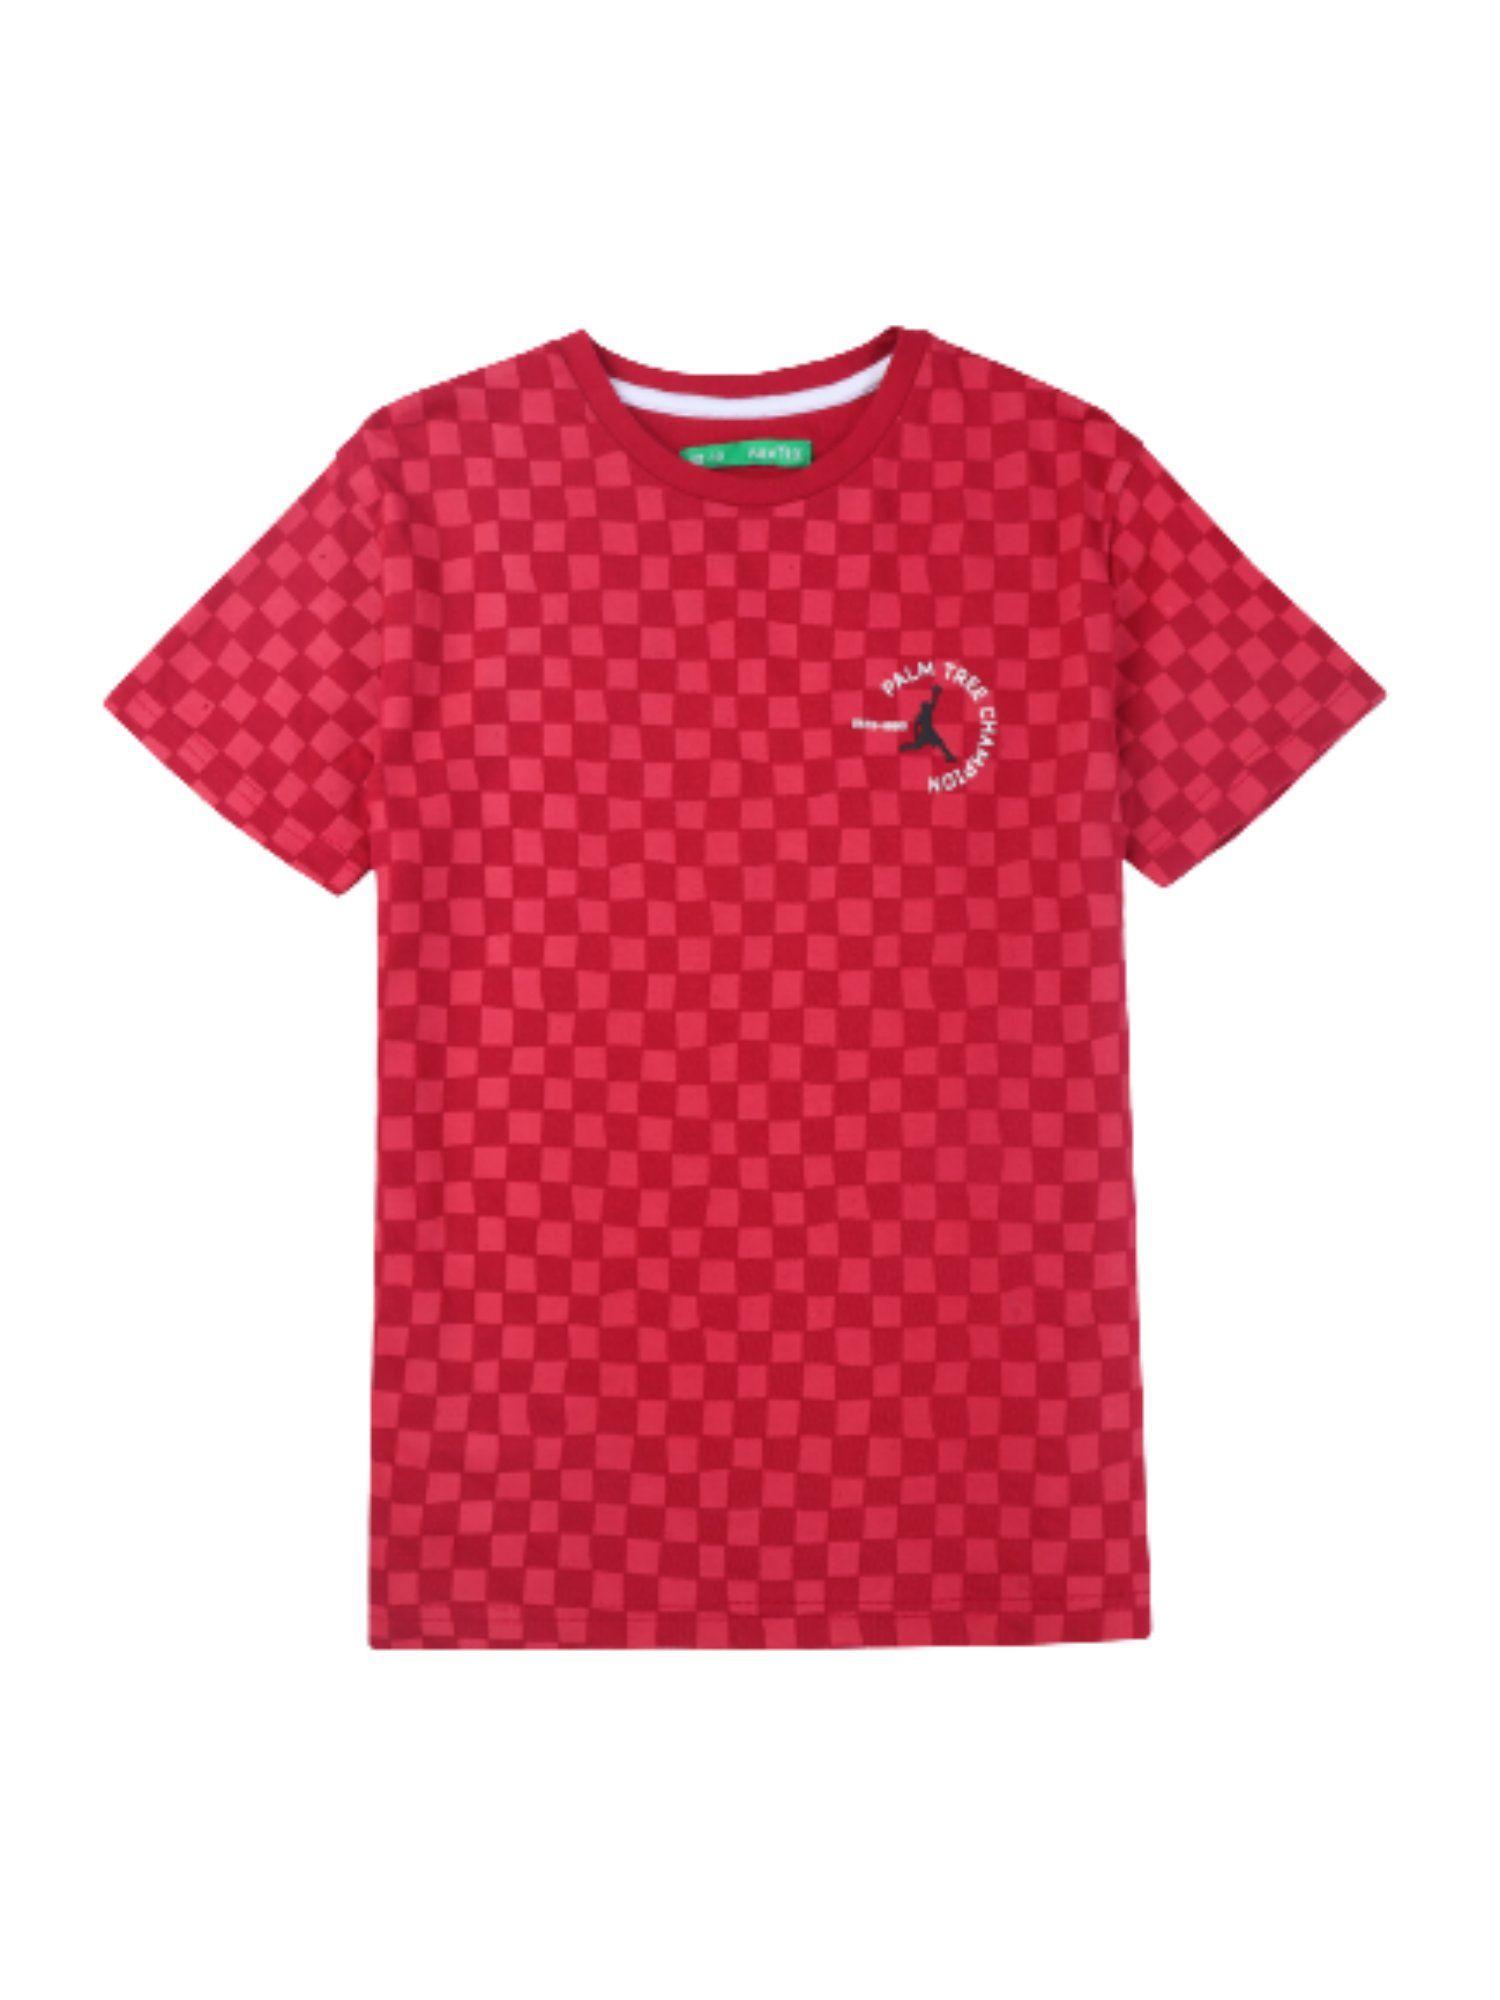 boys red cotton printed t-shirt